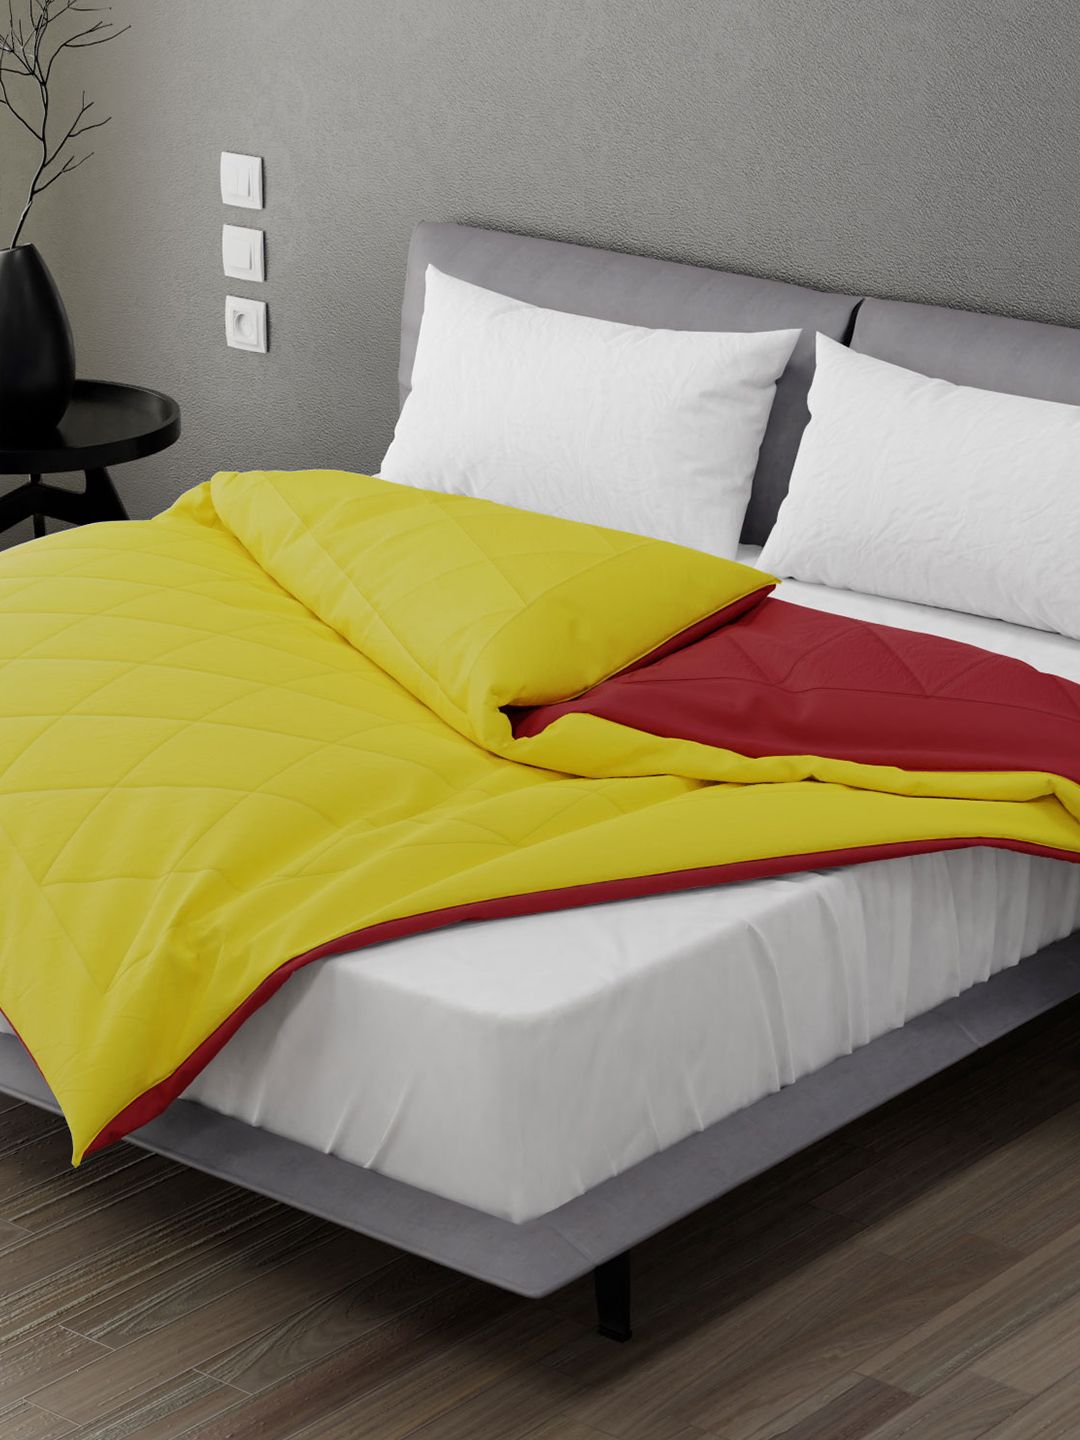 Stoa Paris Yellow & Red Microfiber AC Room ReversibleDouble Bed Comforter Price in India